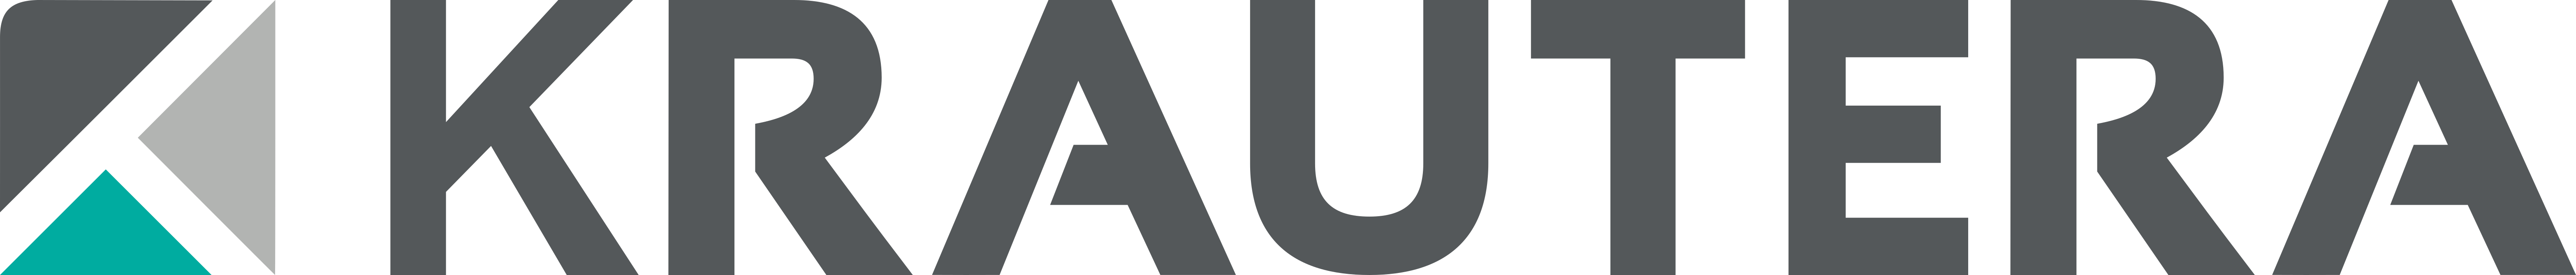 Krautera ir logo PNG